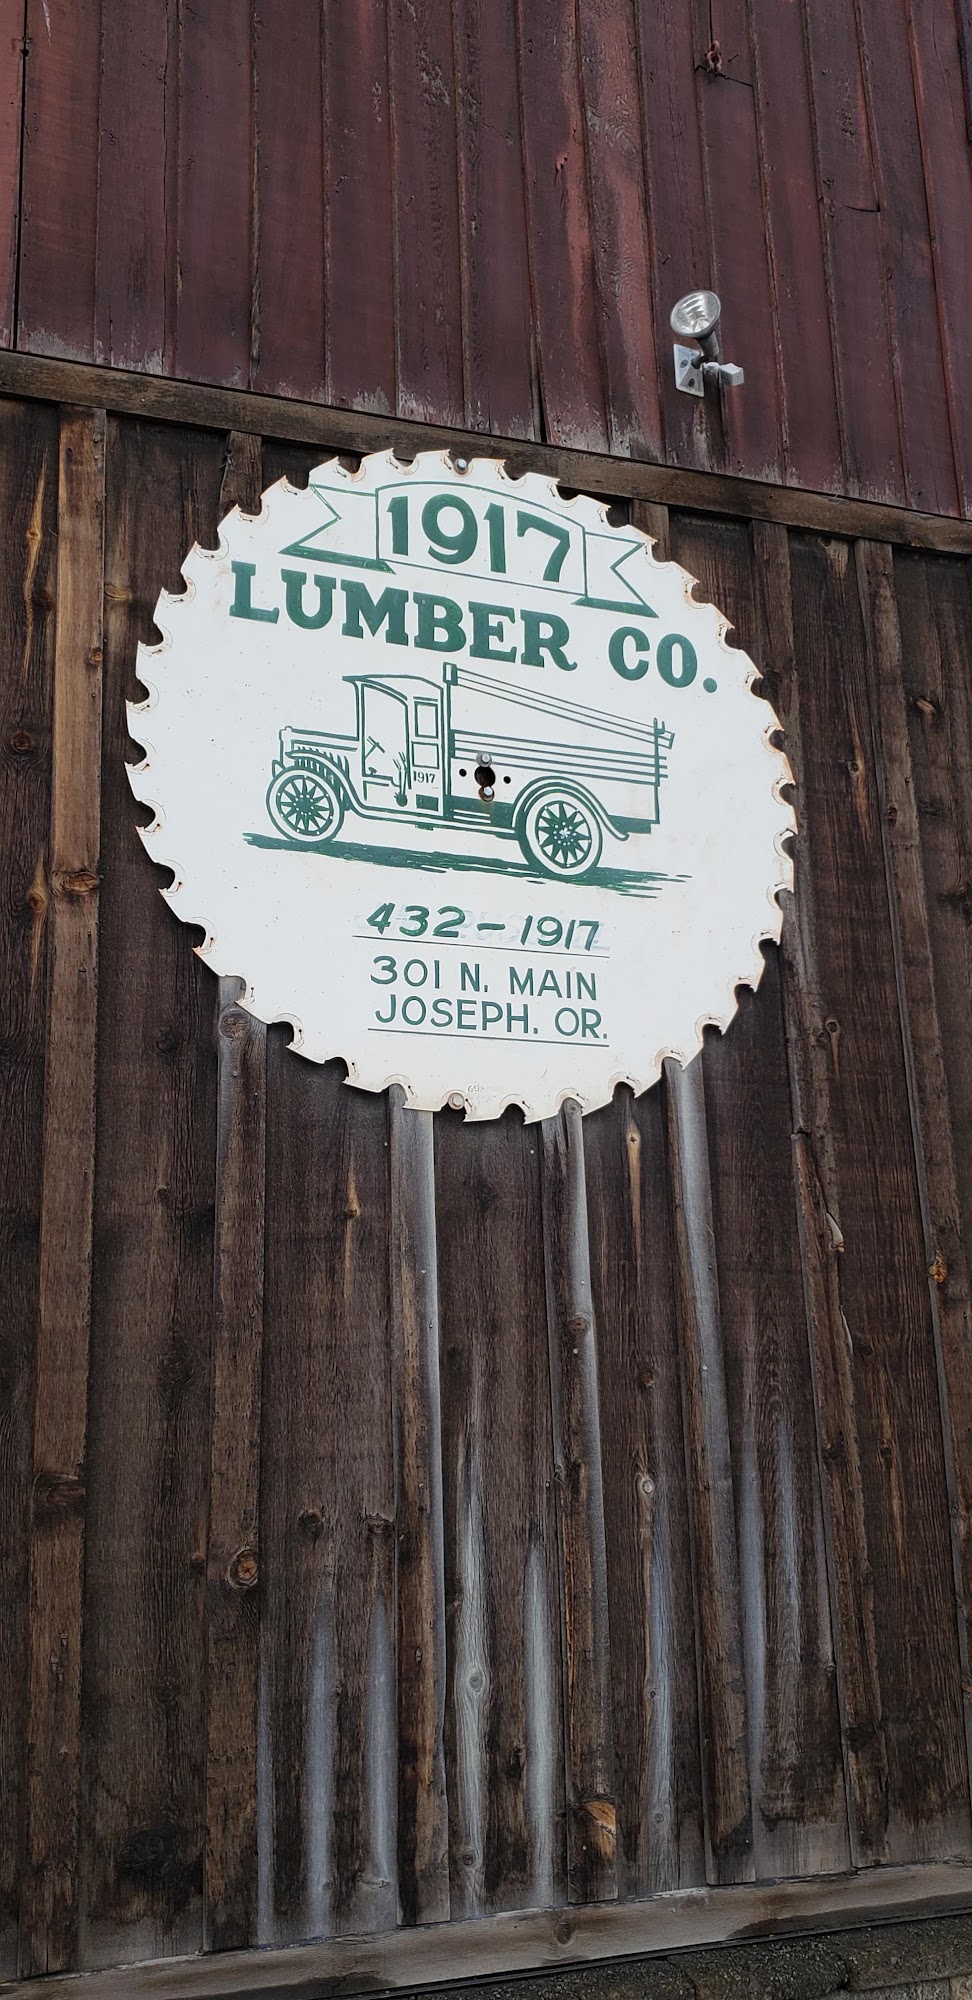 1917 Lumber Co 301 N Main St, Joseph Oregon 97846